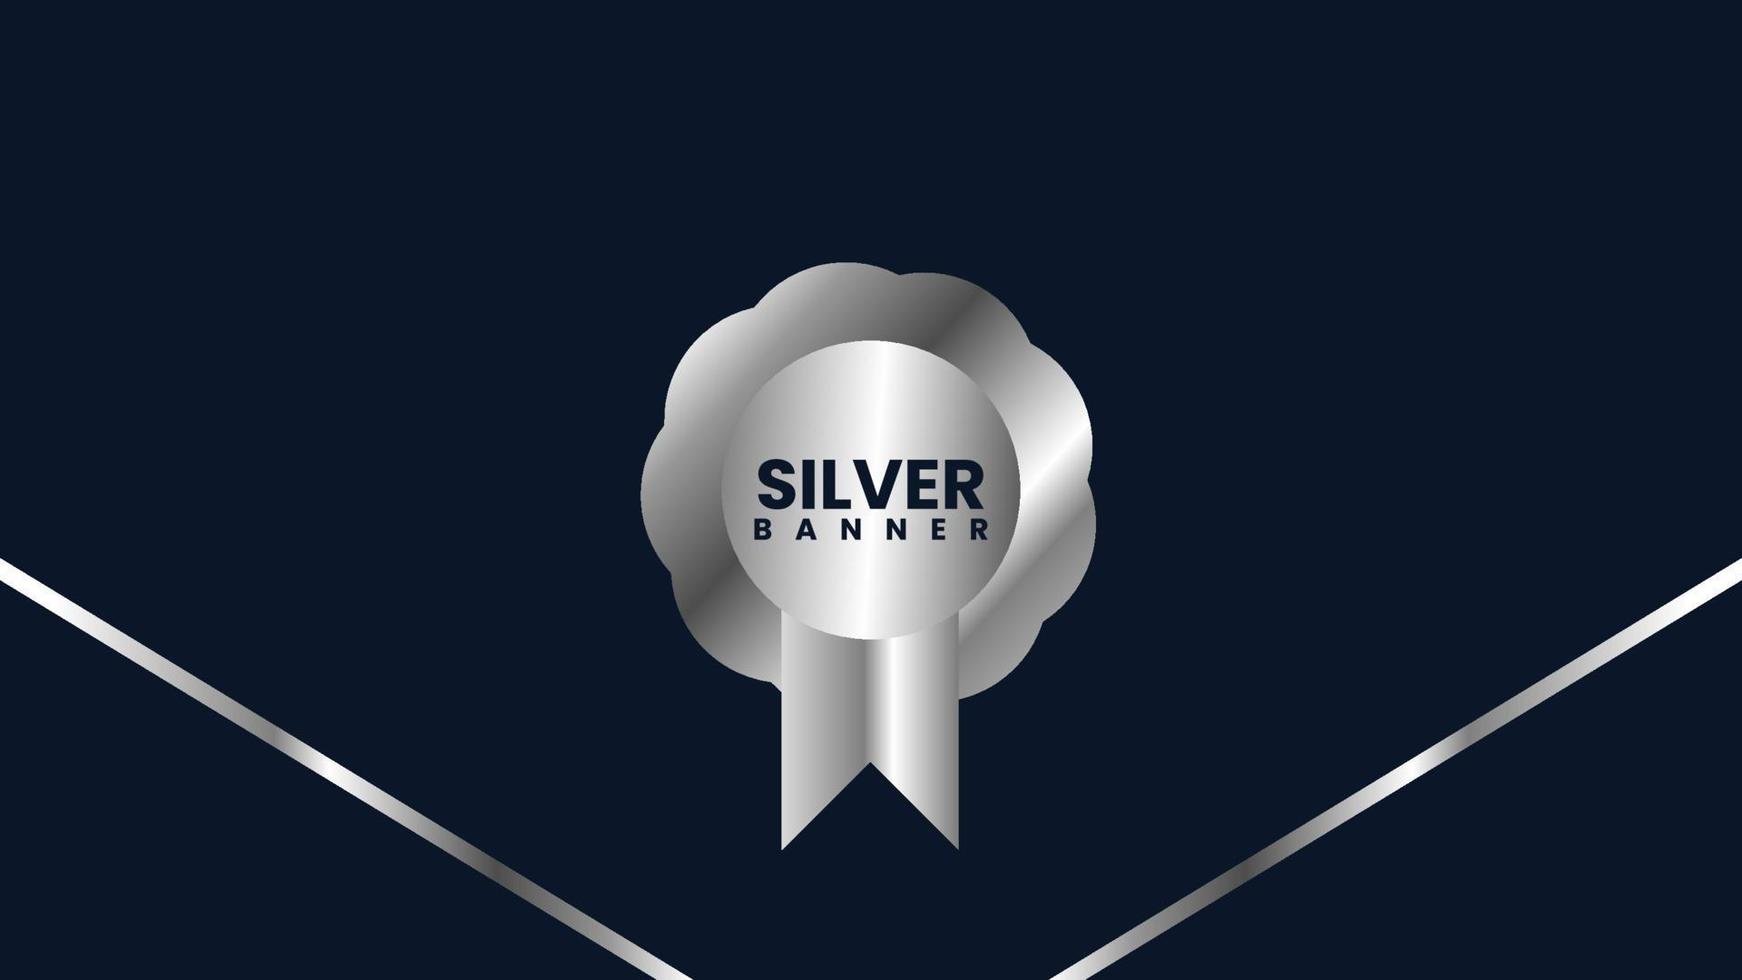 Banner silver metalic modern background vector